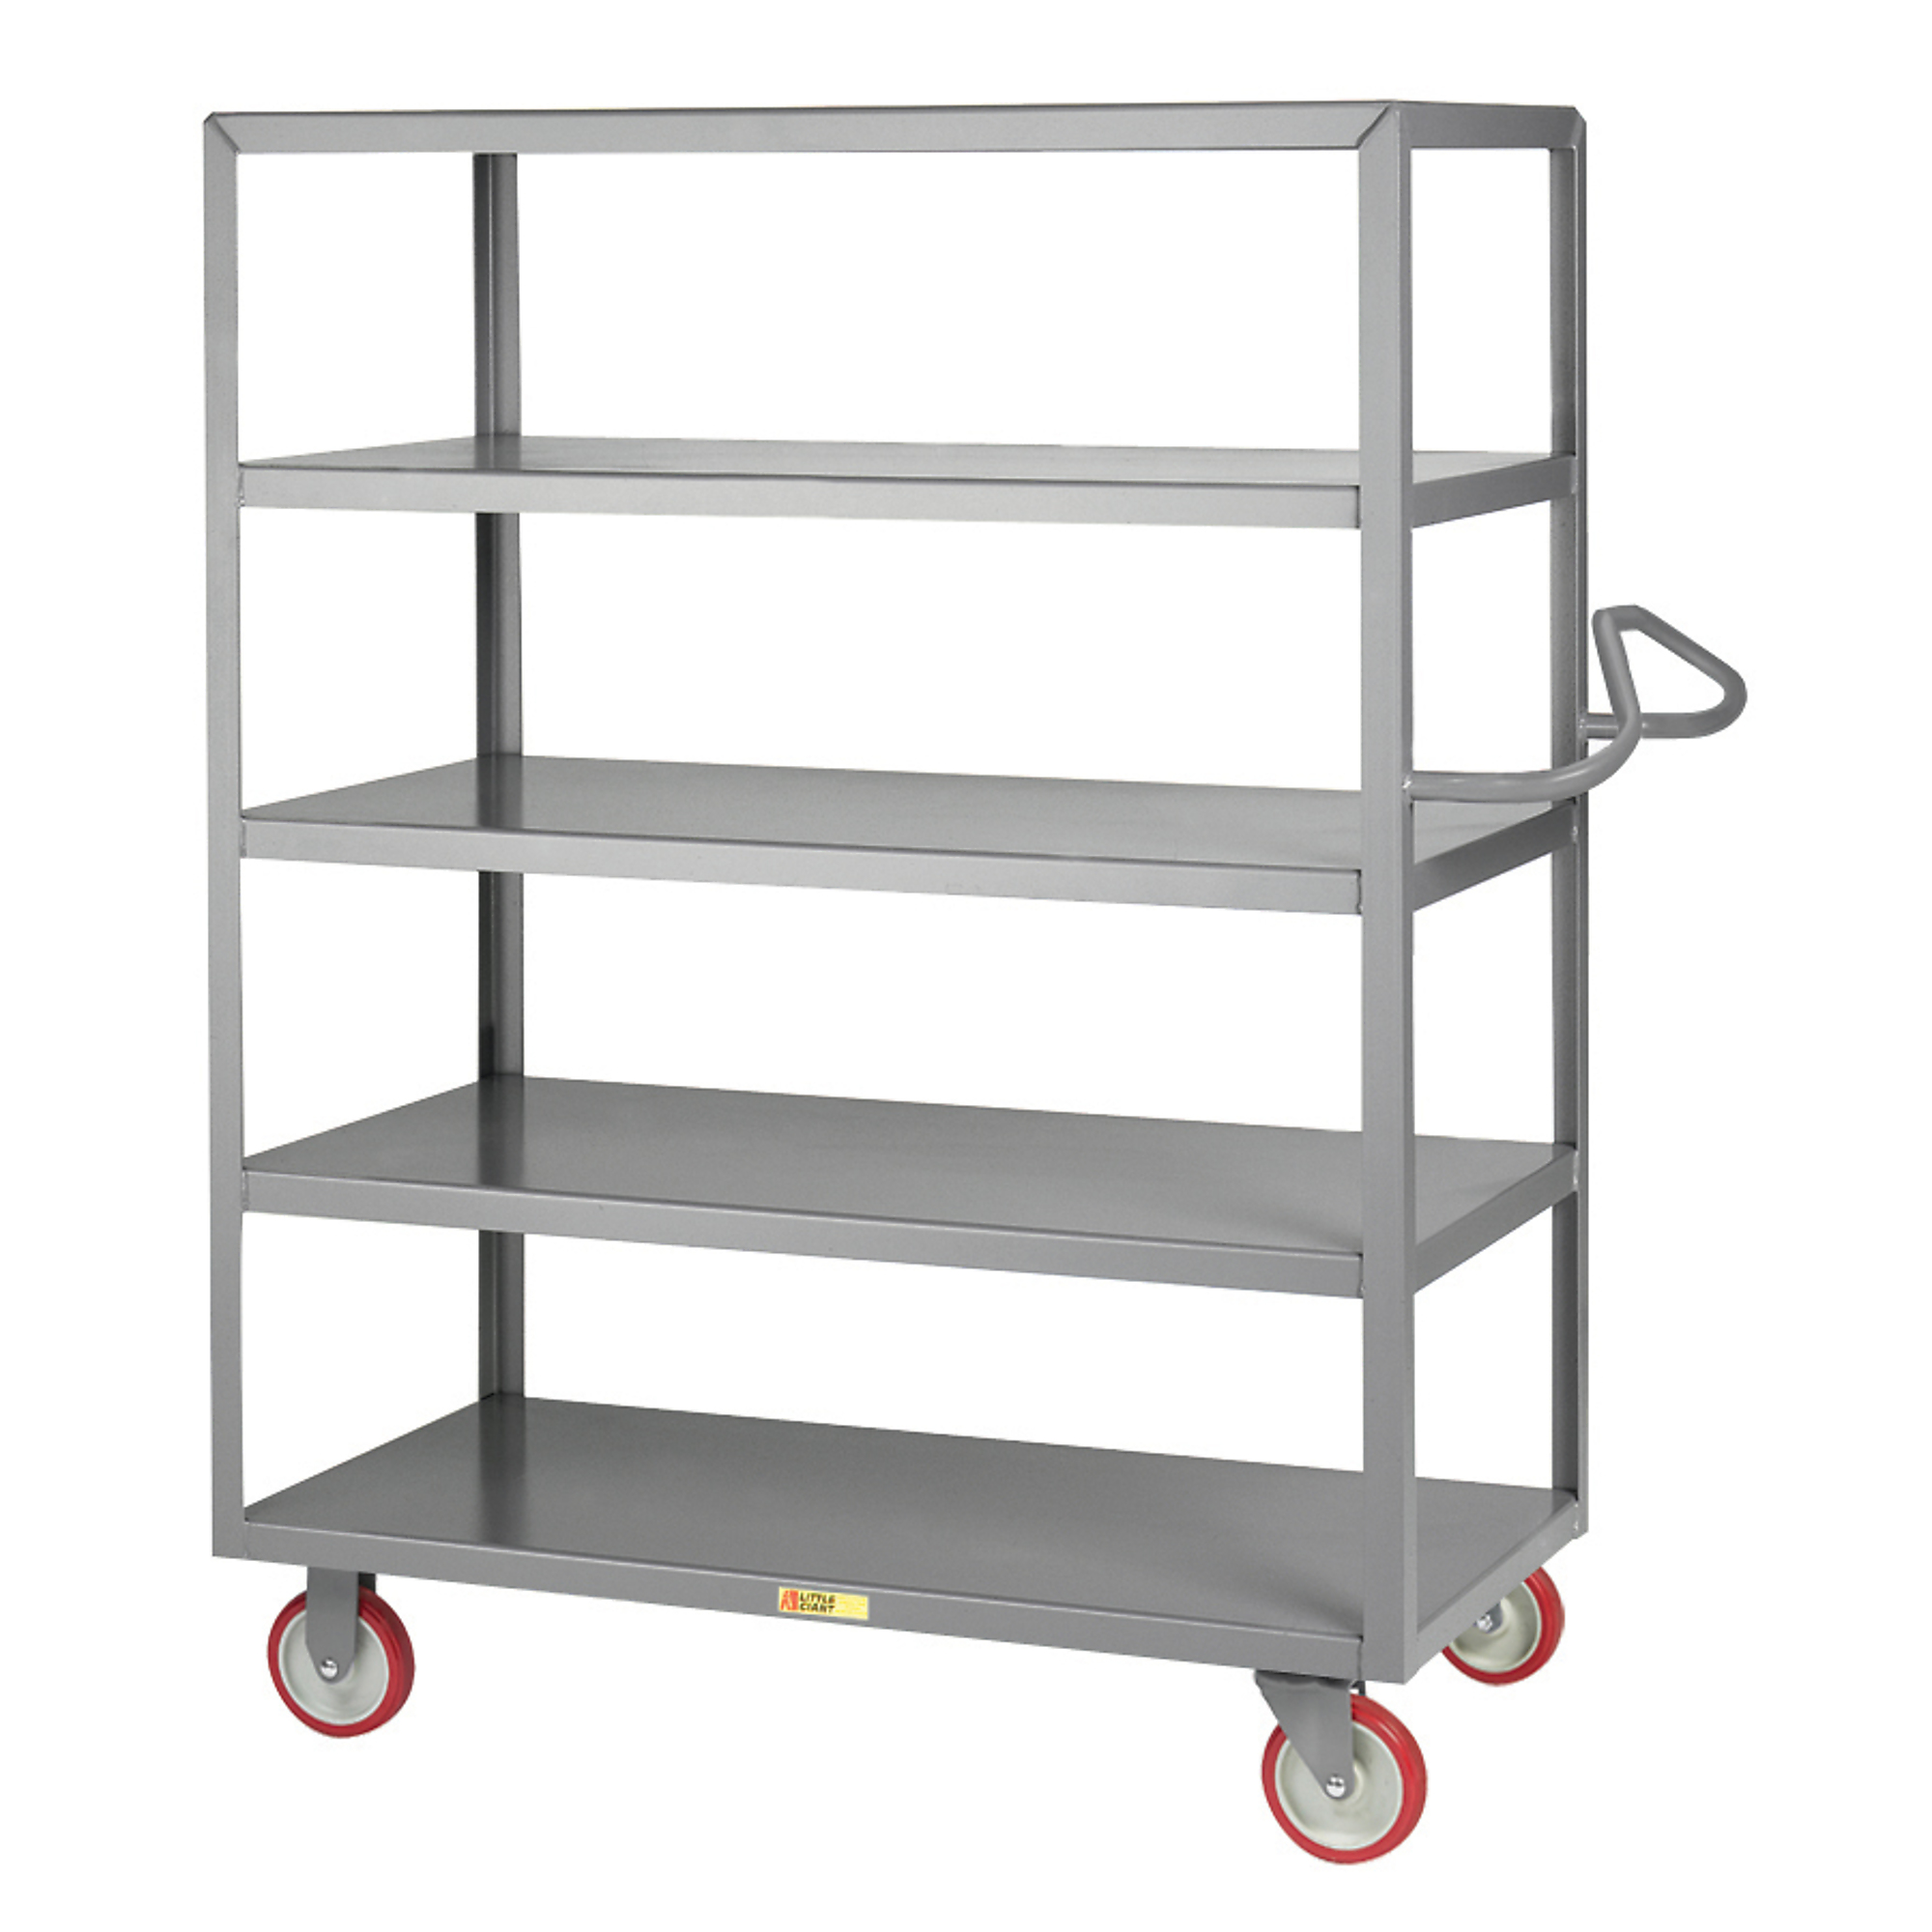 Little Giant, 5-Shelf Service Cart, Ergo Handle, 24x36, 1200 lbs, Total Capacity 1200 lb, Shelves (qty.) 5, Material Carbon Steel, Model 5ENM-2436-5PY